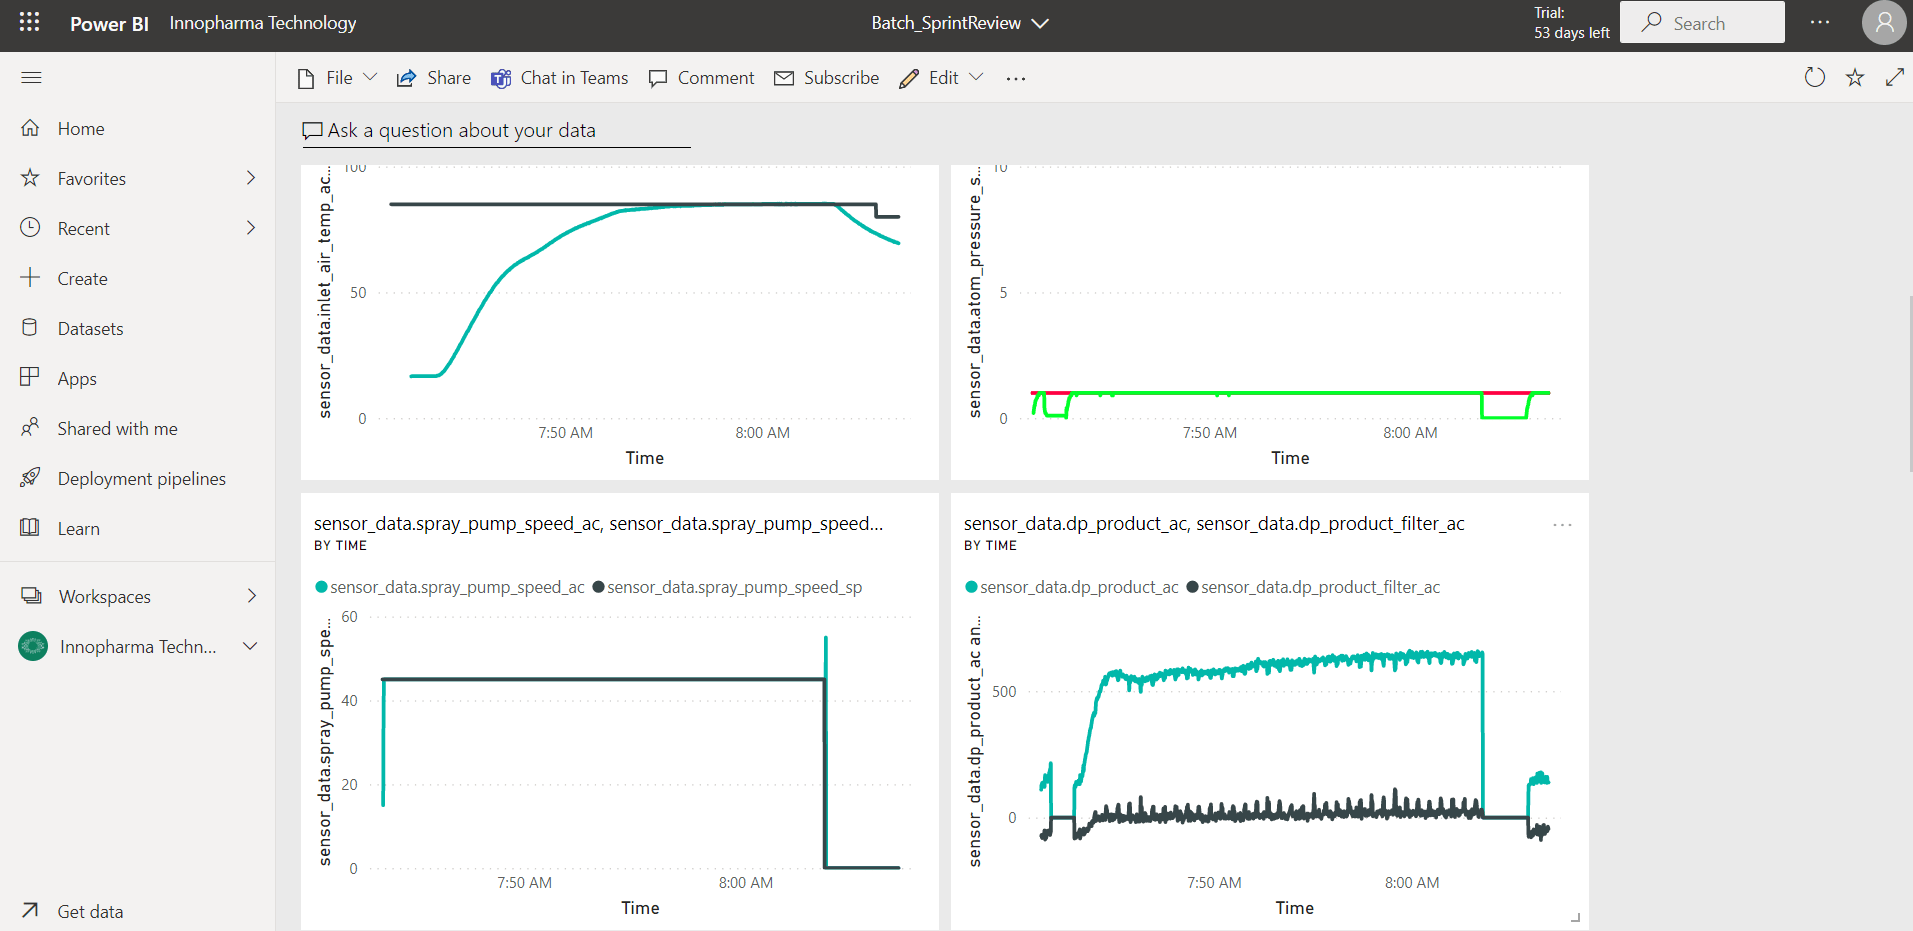 Interactive Power BI dashboard showing batch data visualizations for captured sensor data